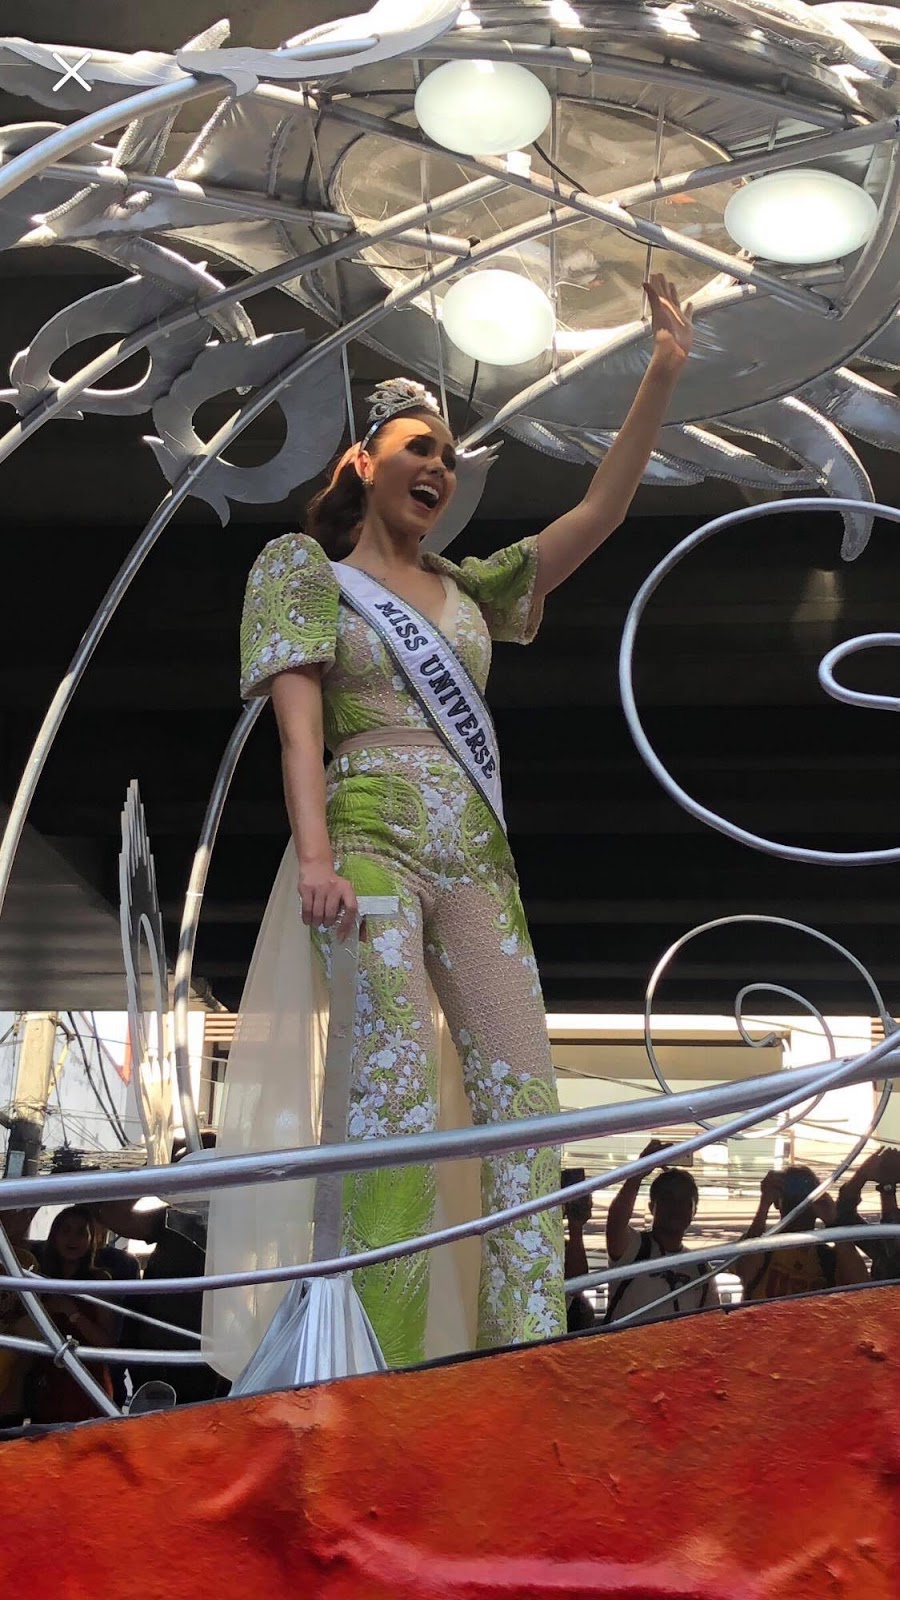 Miss Universe 2018 Catriona Gray's homecoming parade